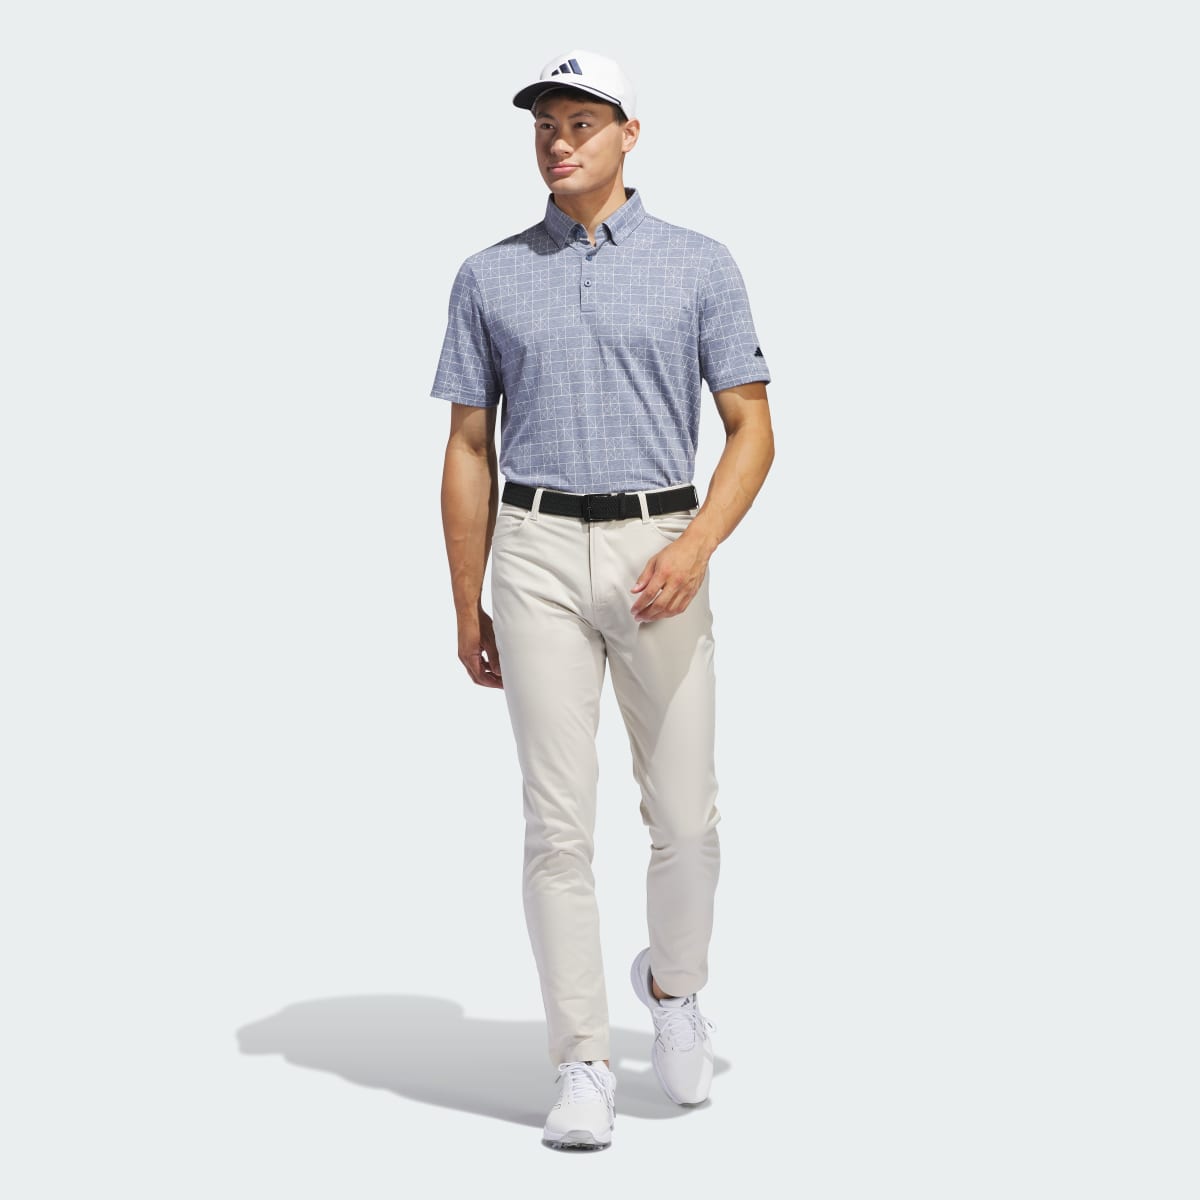 Adidas Go-To Novelty Polo Shirt. 6